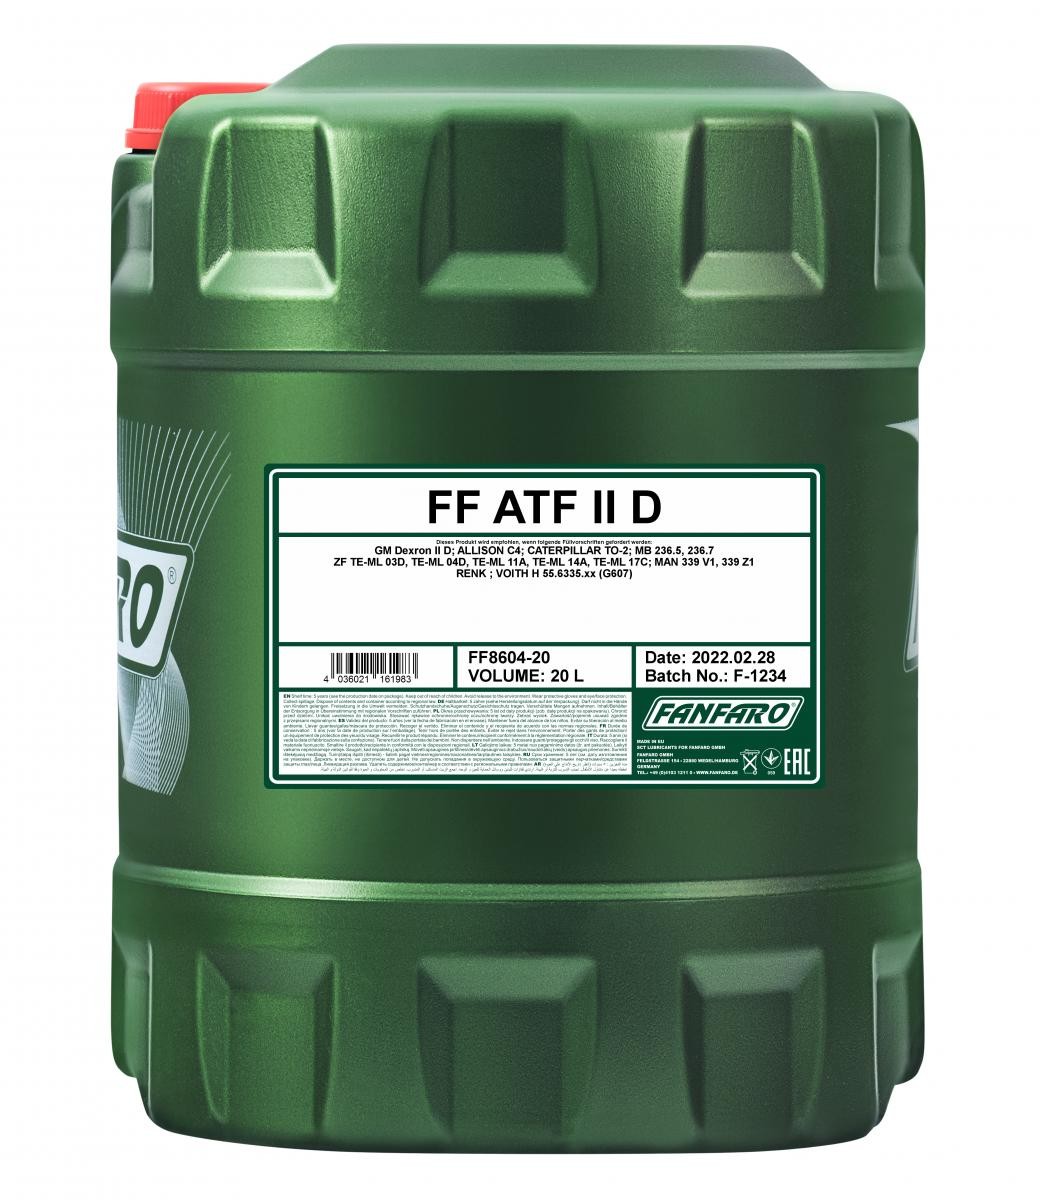 FANFARO ATF II D FF8604-20 Automatic transmission fluid ATF II, 20l, Yellow